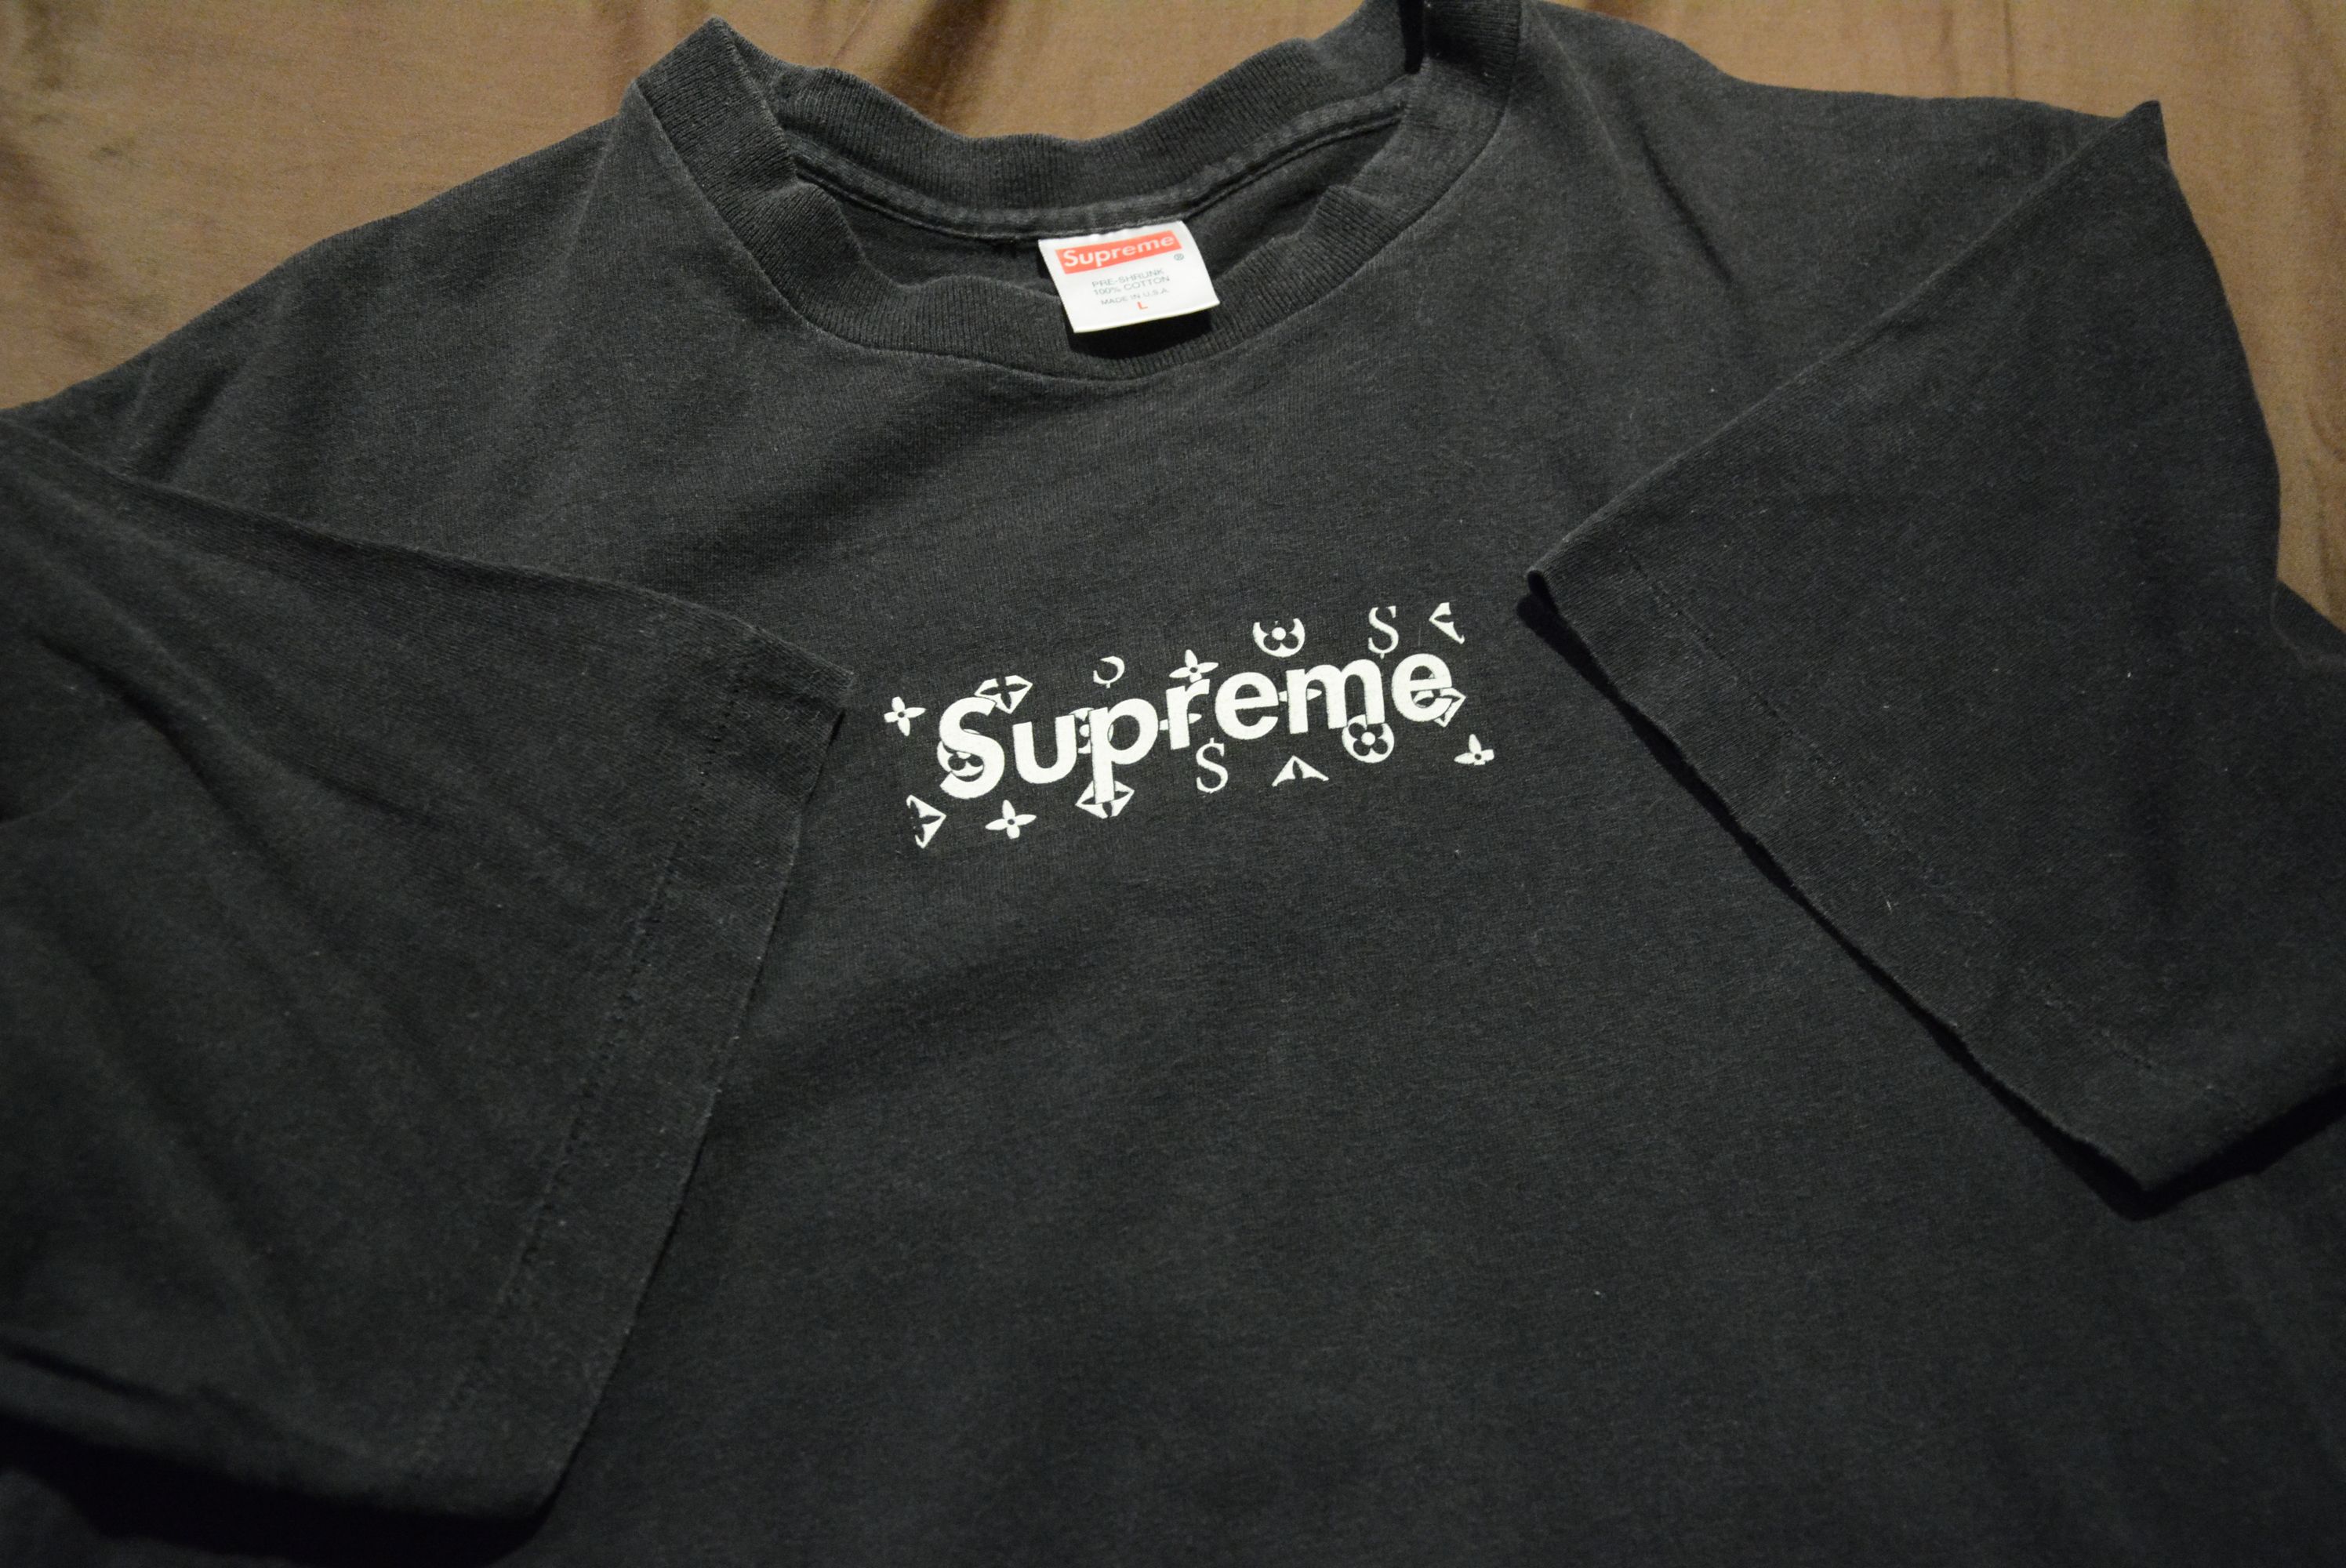 WTB] Supreme x Louis Vuitton Box Logo T-Shirt Medium : r/supremeclothing